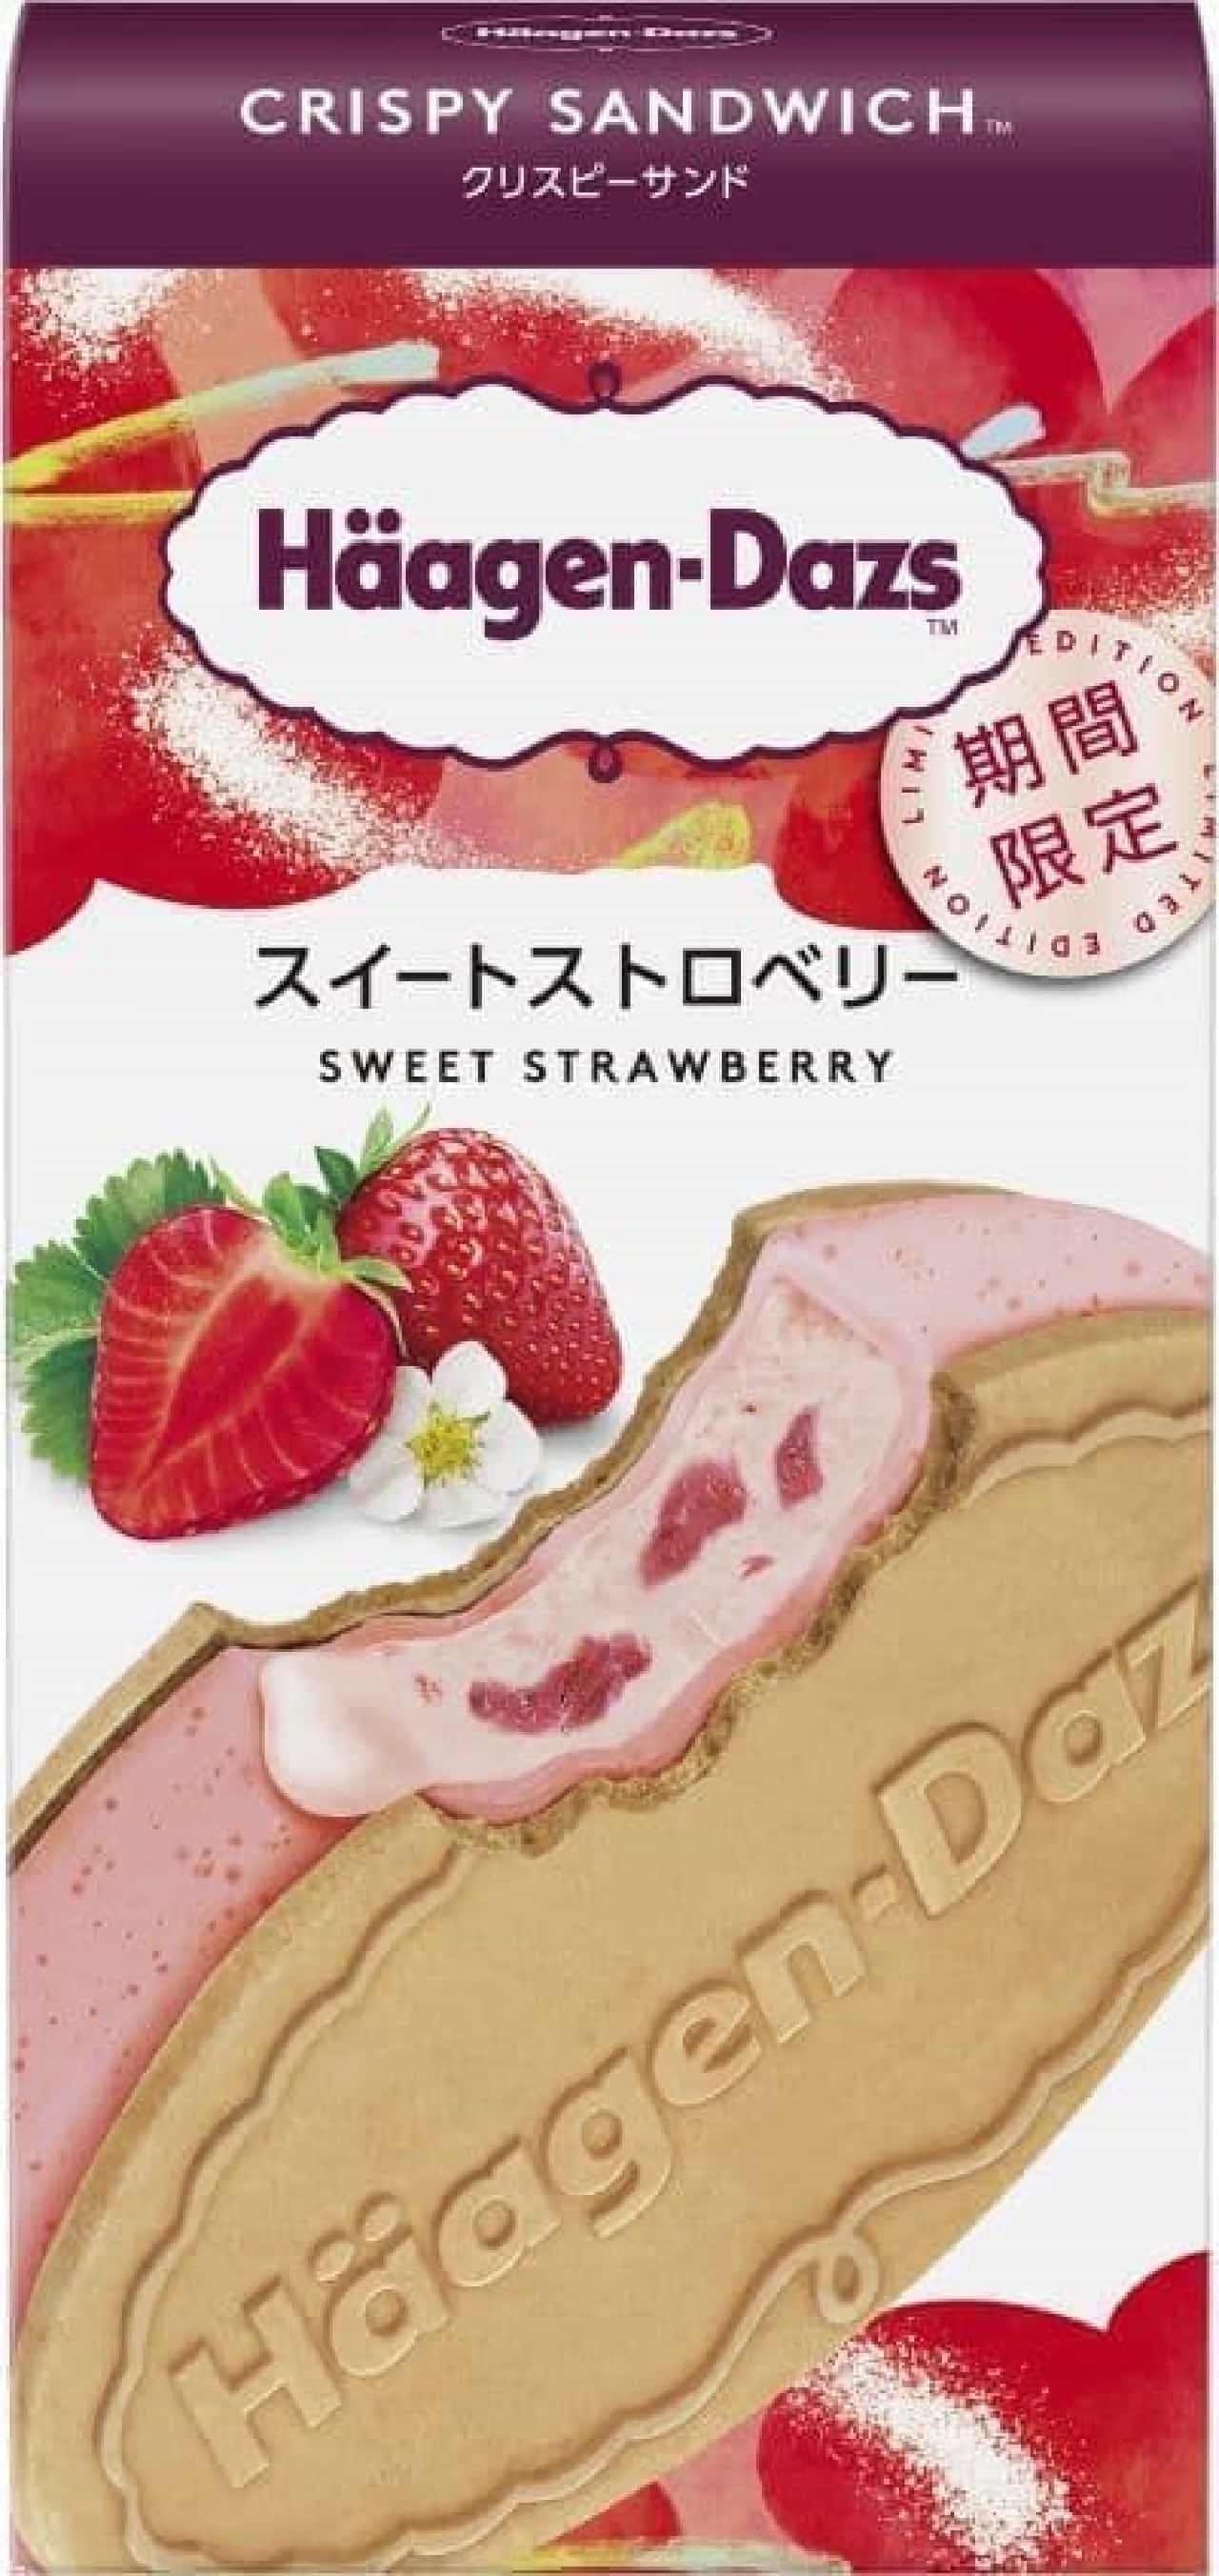 Haagen-Dazs Crispy Sand Sweet Strawberry